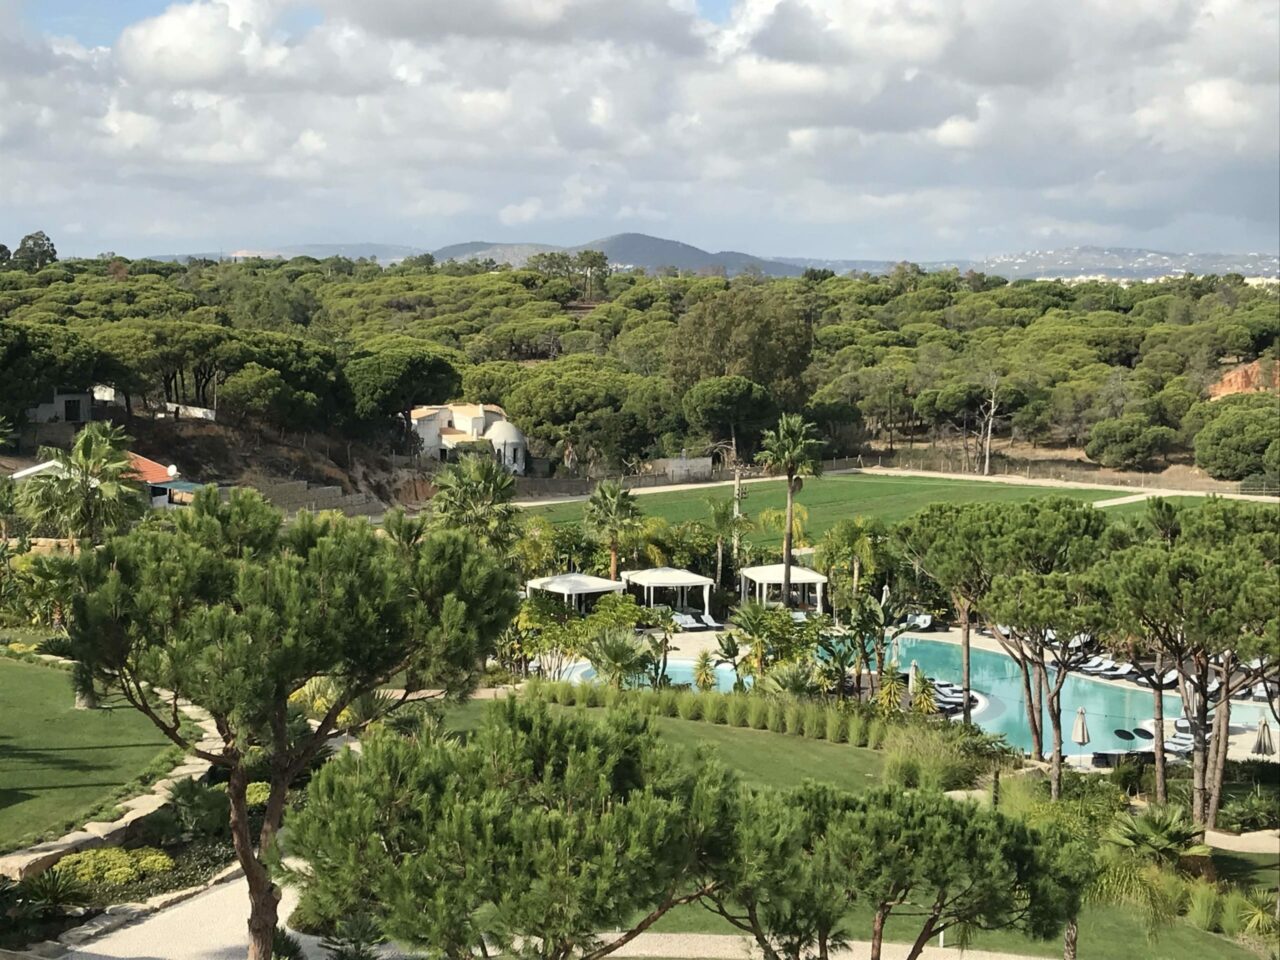 Conrad Hotel in Algarve Swimming Pool